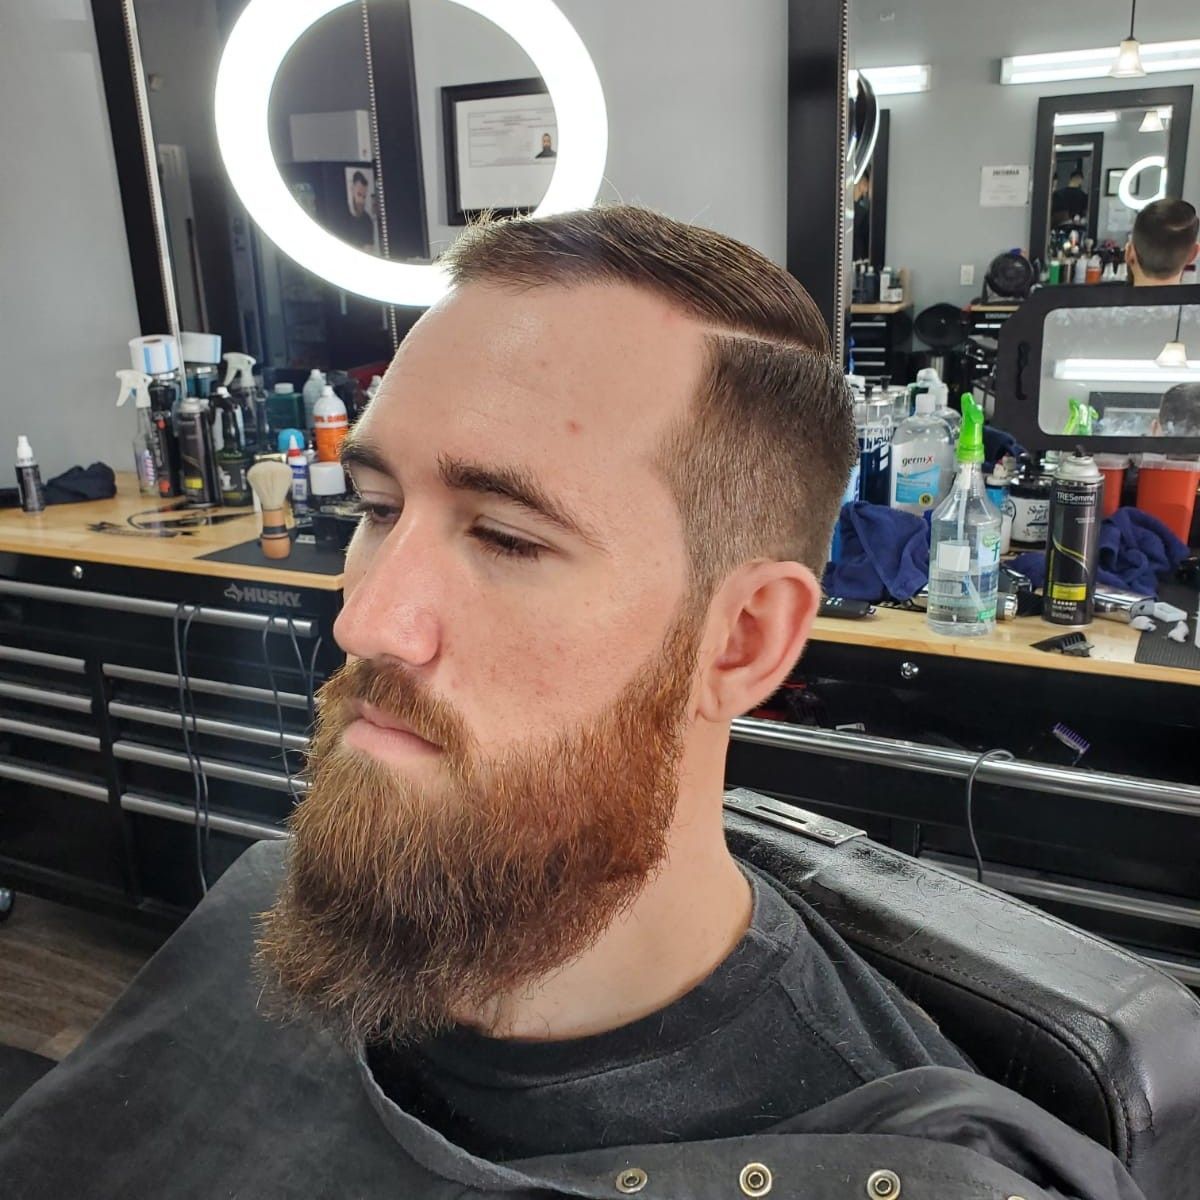 Haircut and beard portfolio